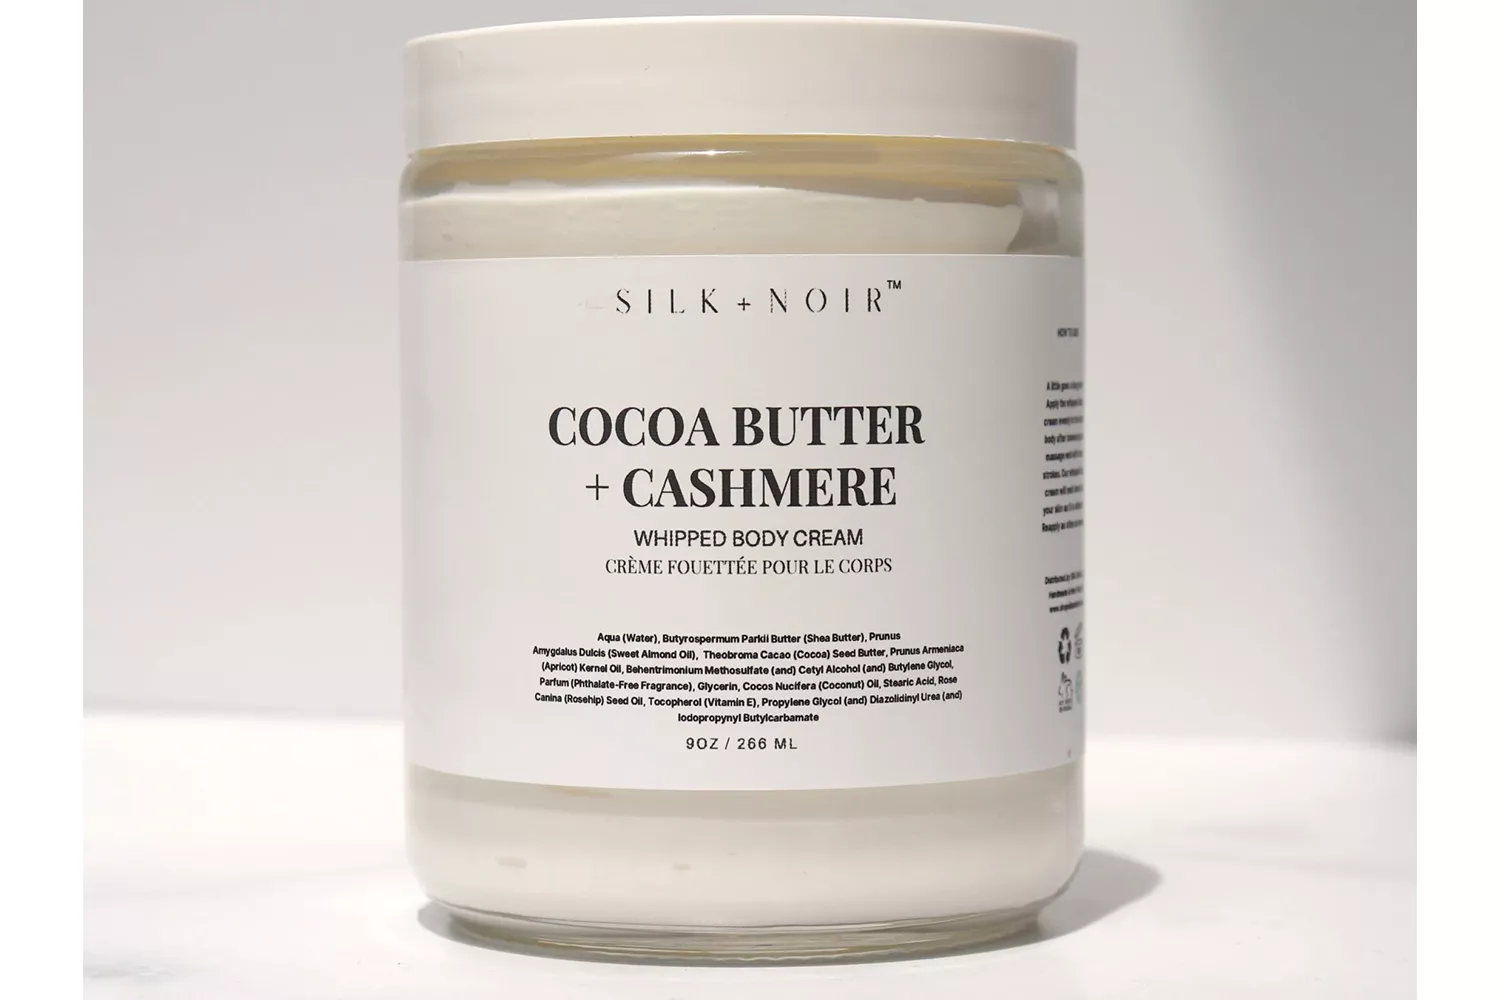 Silk + Noir Cocoa Butter + Cashmere Whipped Body Cream